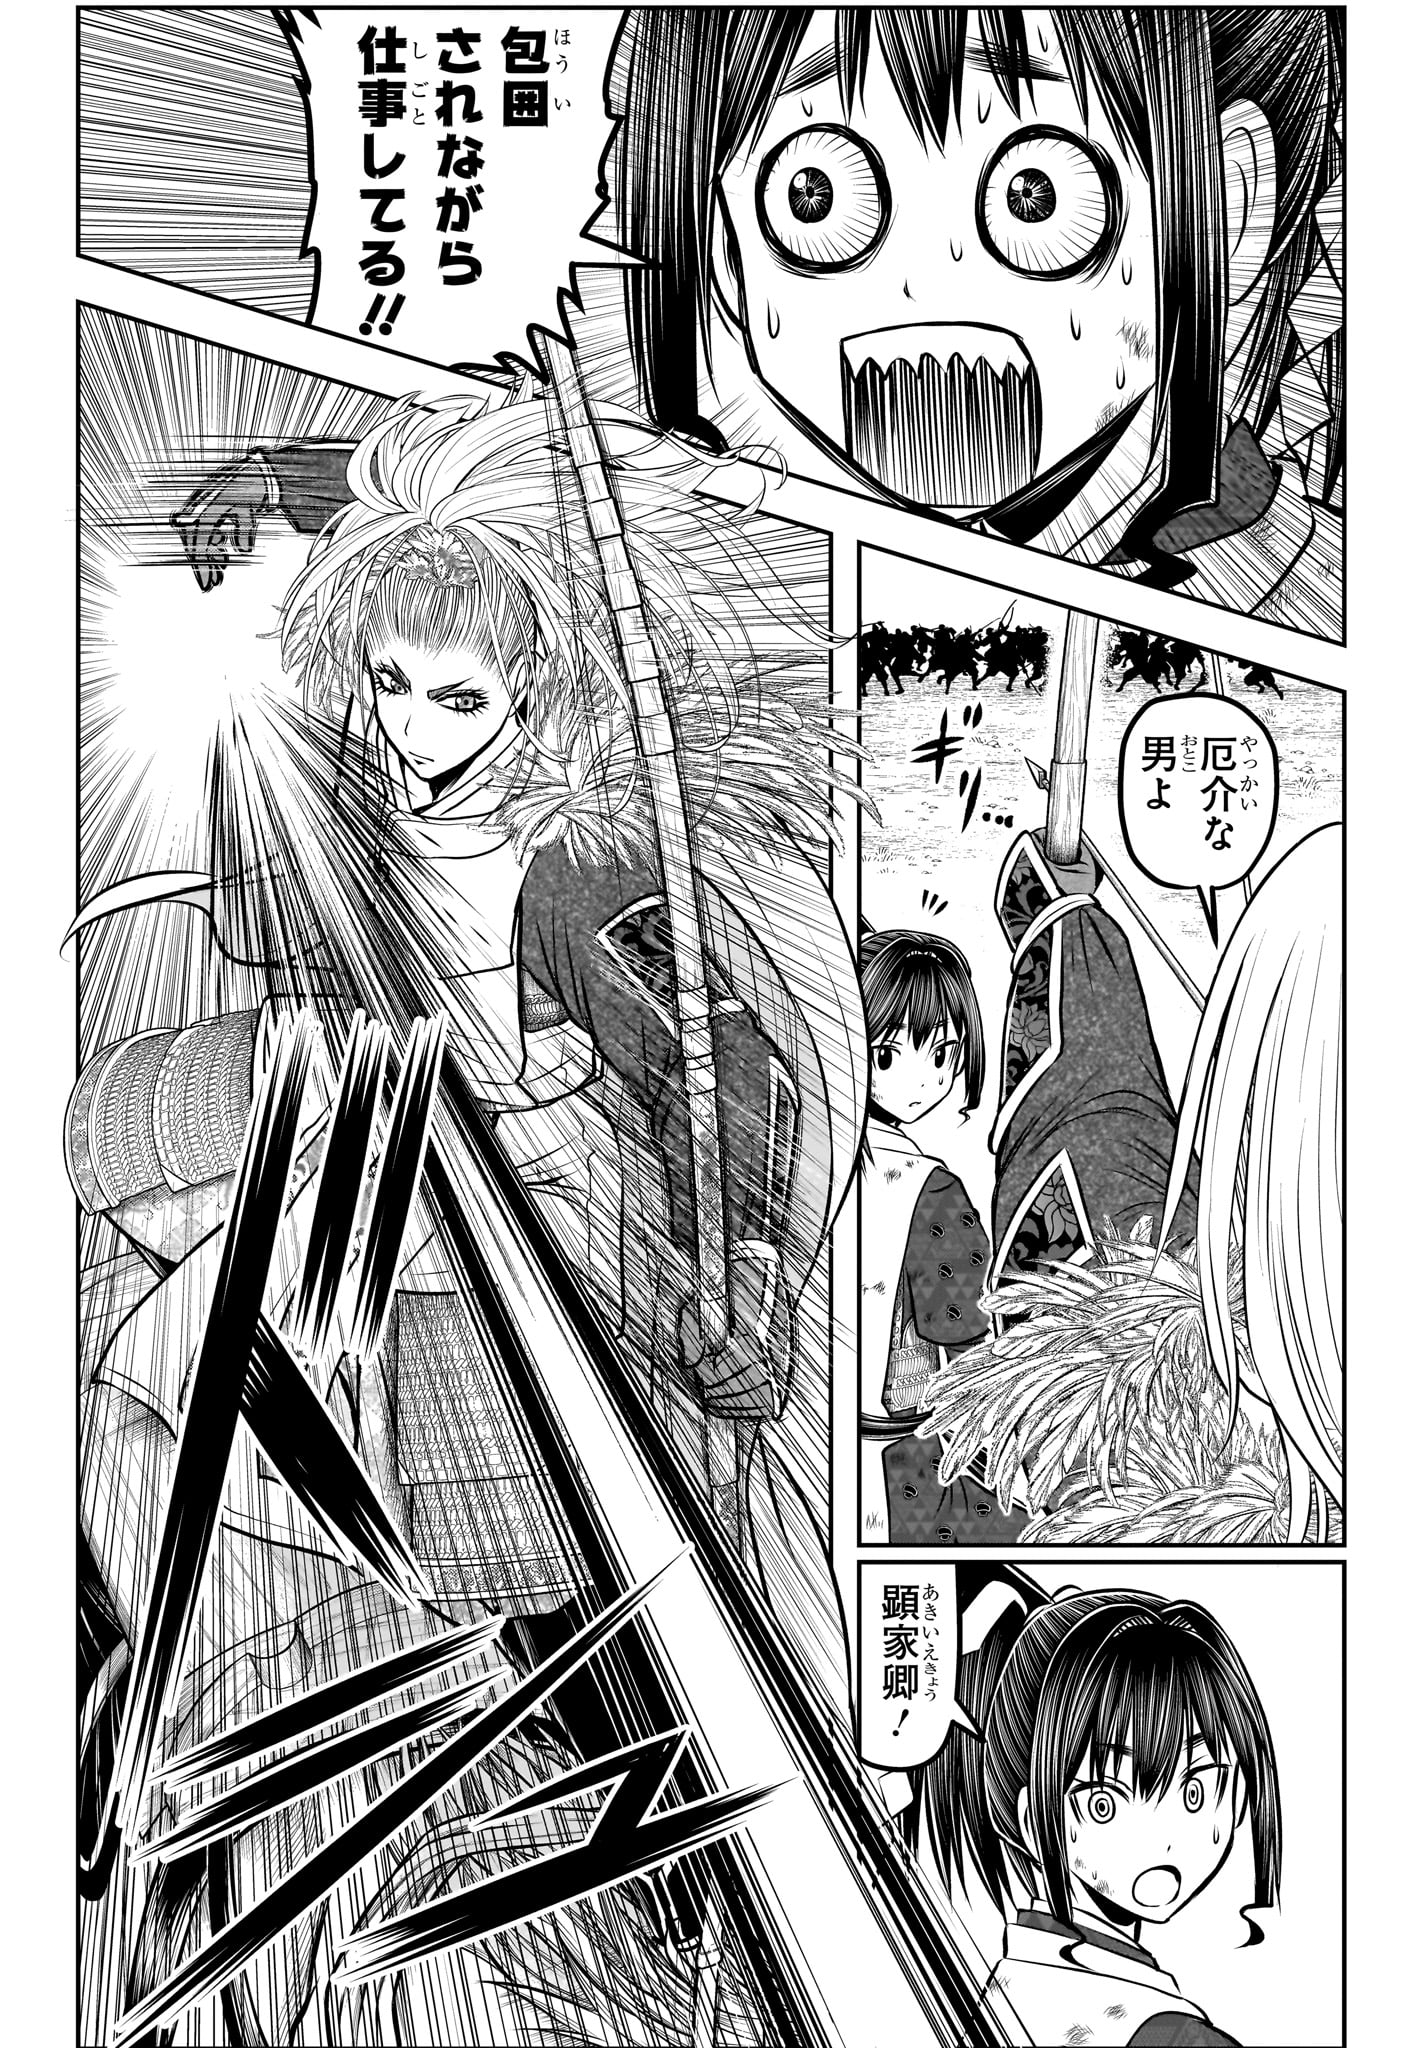 Nige Jouzu no Wakagimi - Chapter 163 - Page 9